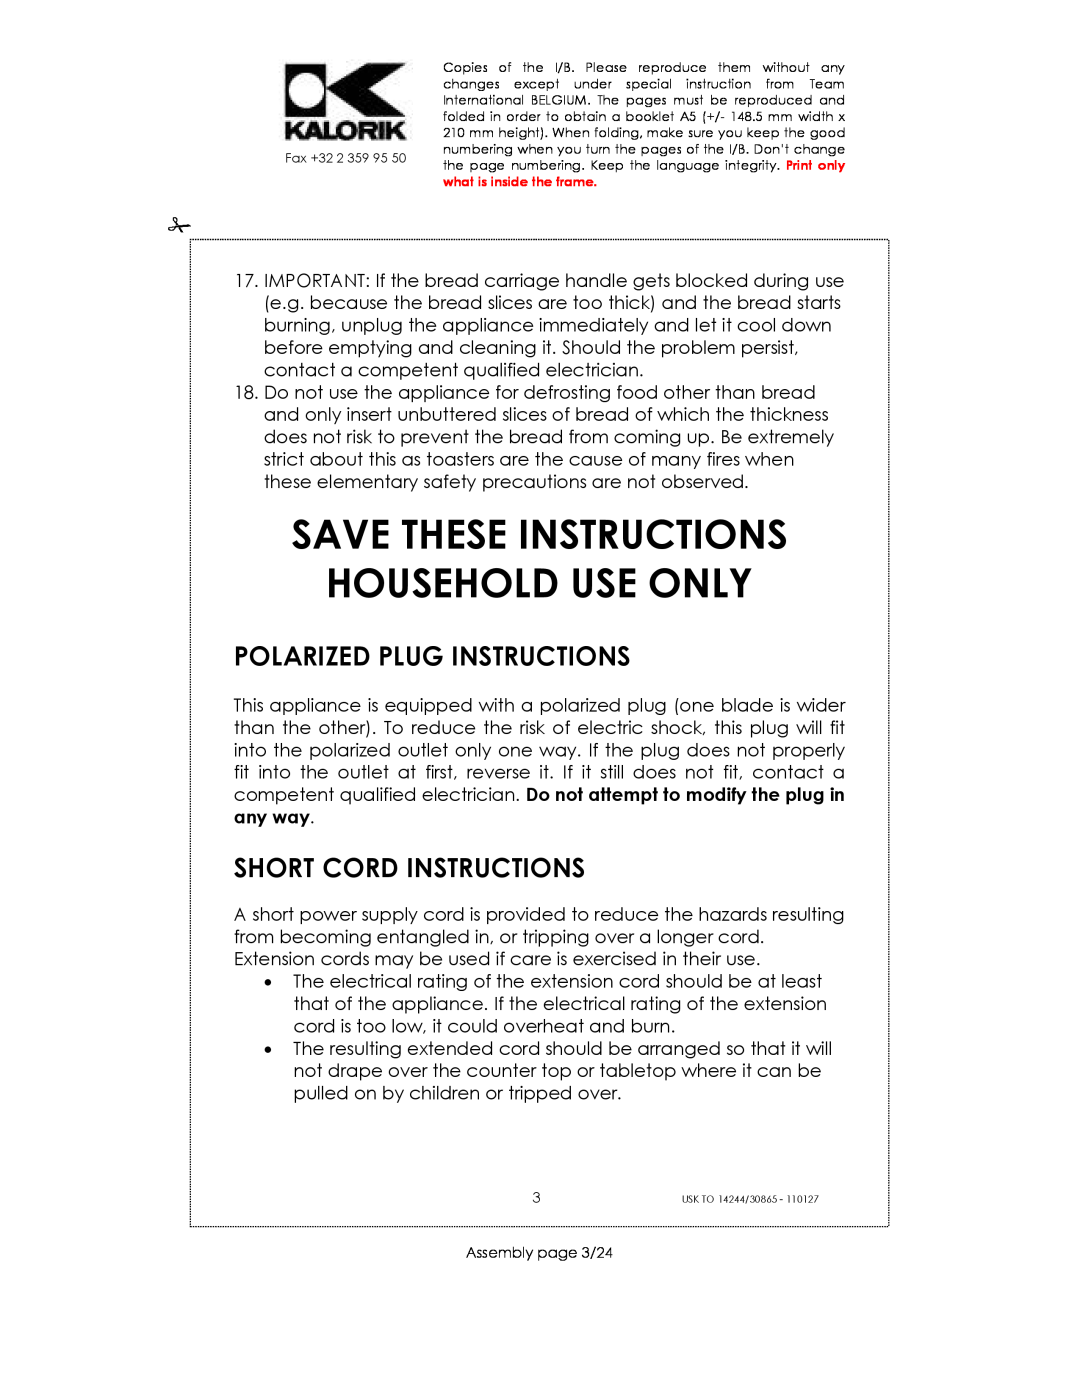 Kalorik 30865, 14244 manual Save These Instructions Household Use Only, Polarized Plug Instructions, Short Cord Instructions 